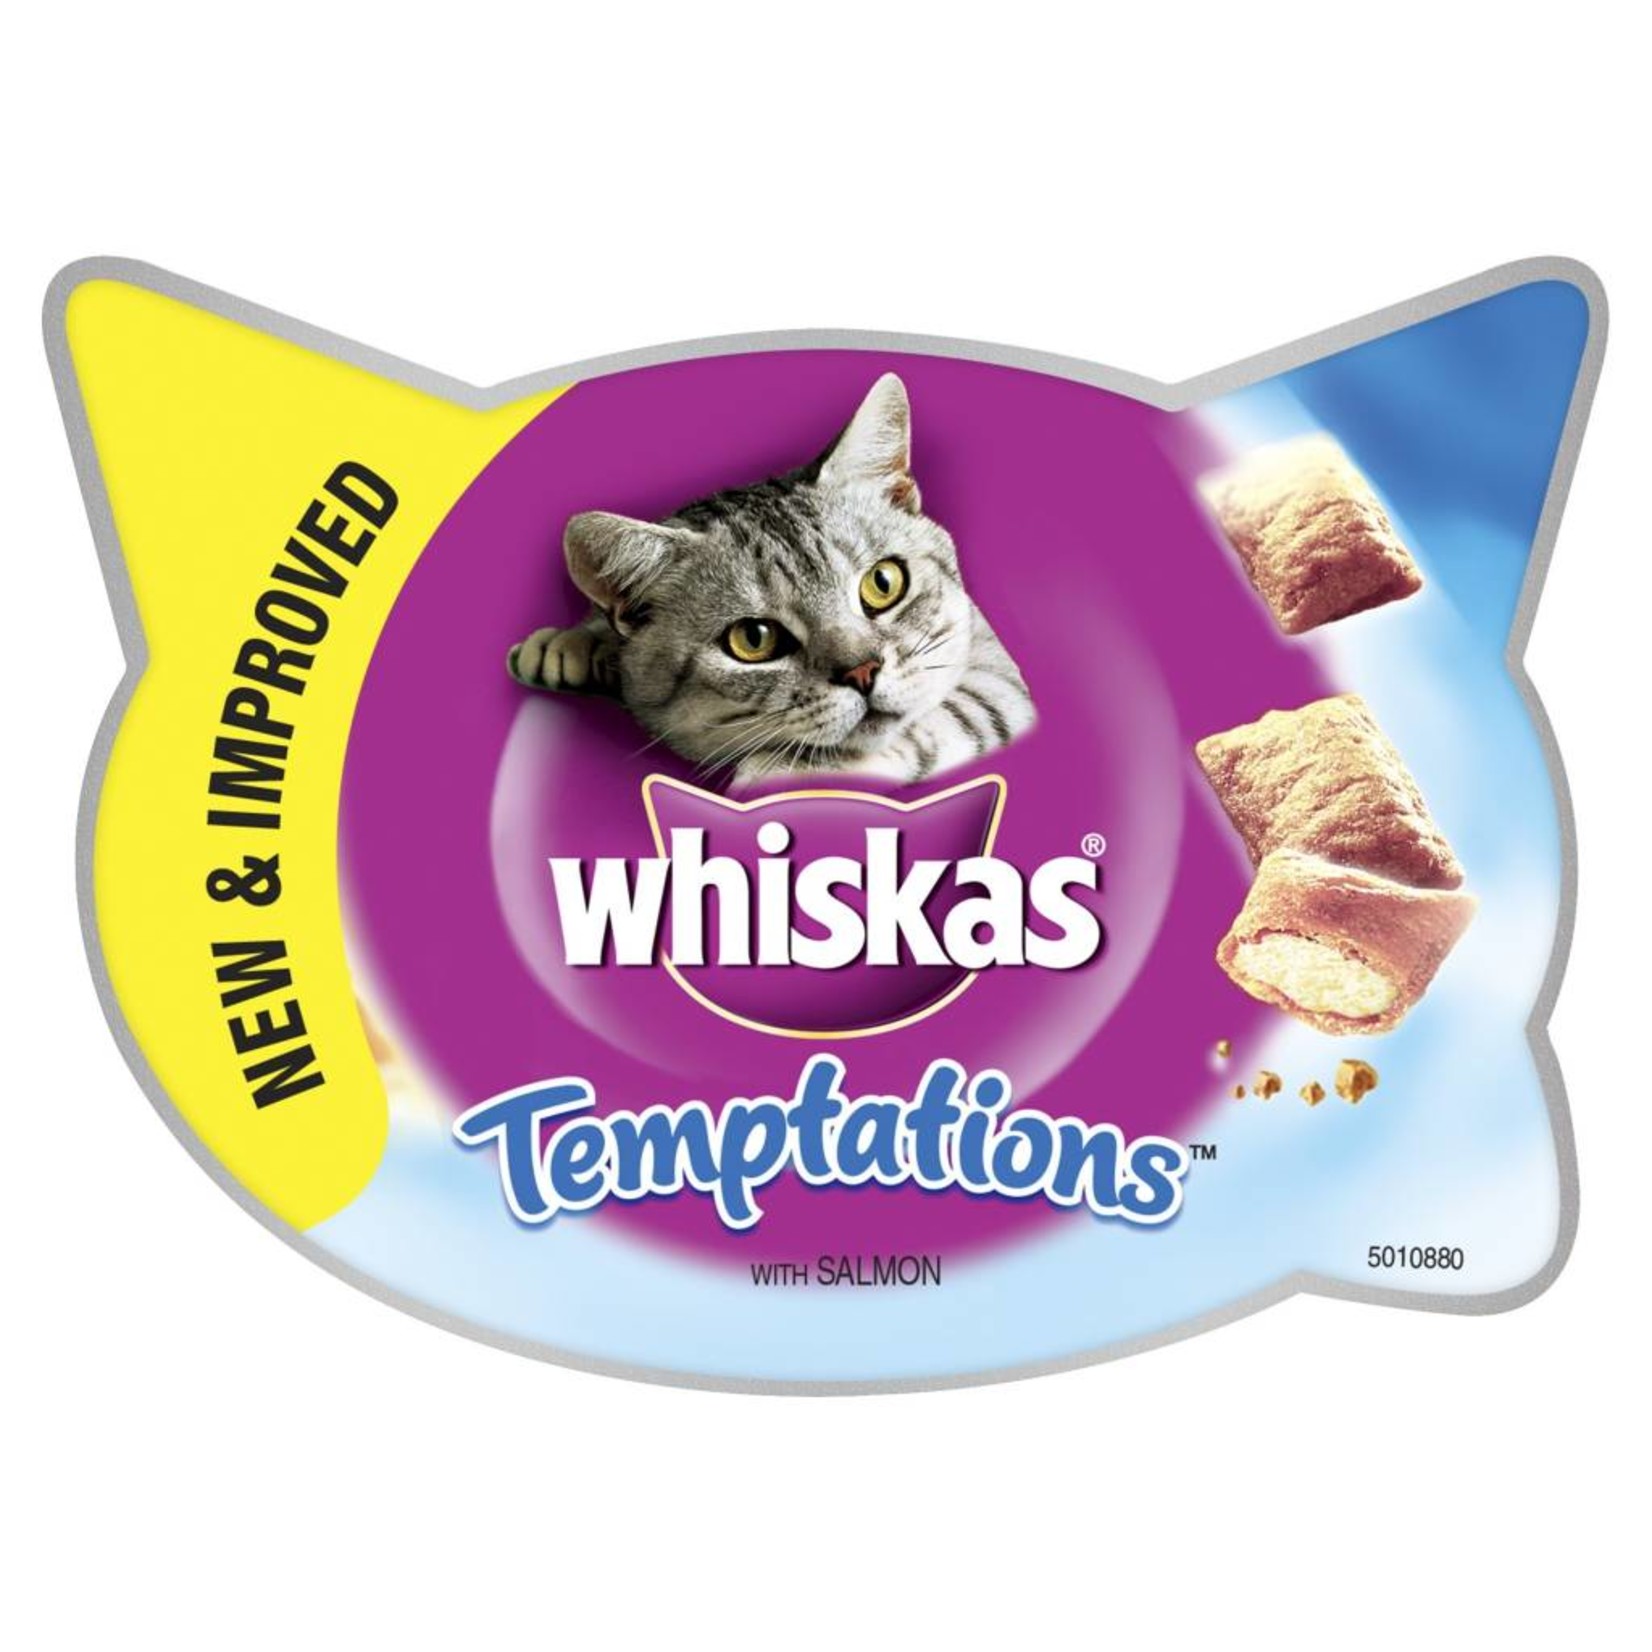 Whiskas Temptations Cat Treats, Salmon, 60g